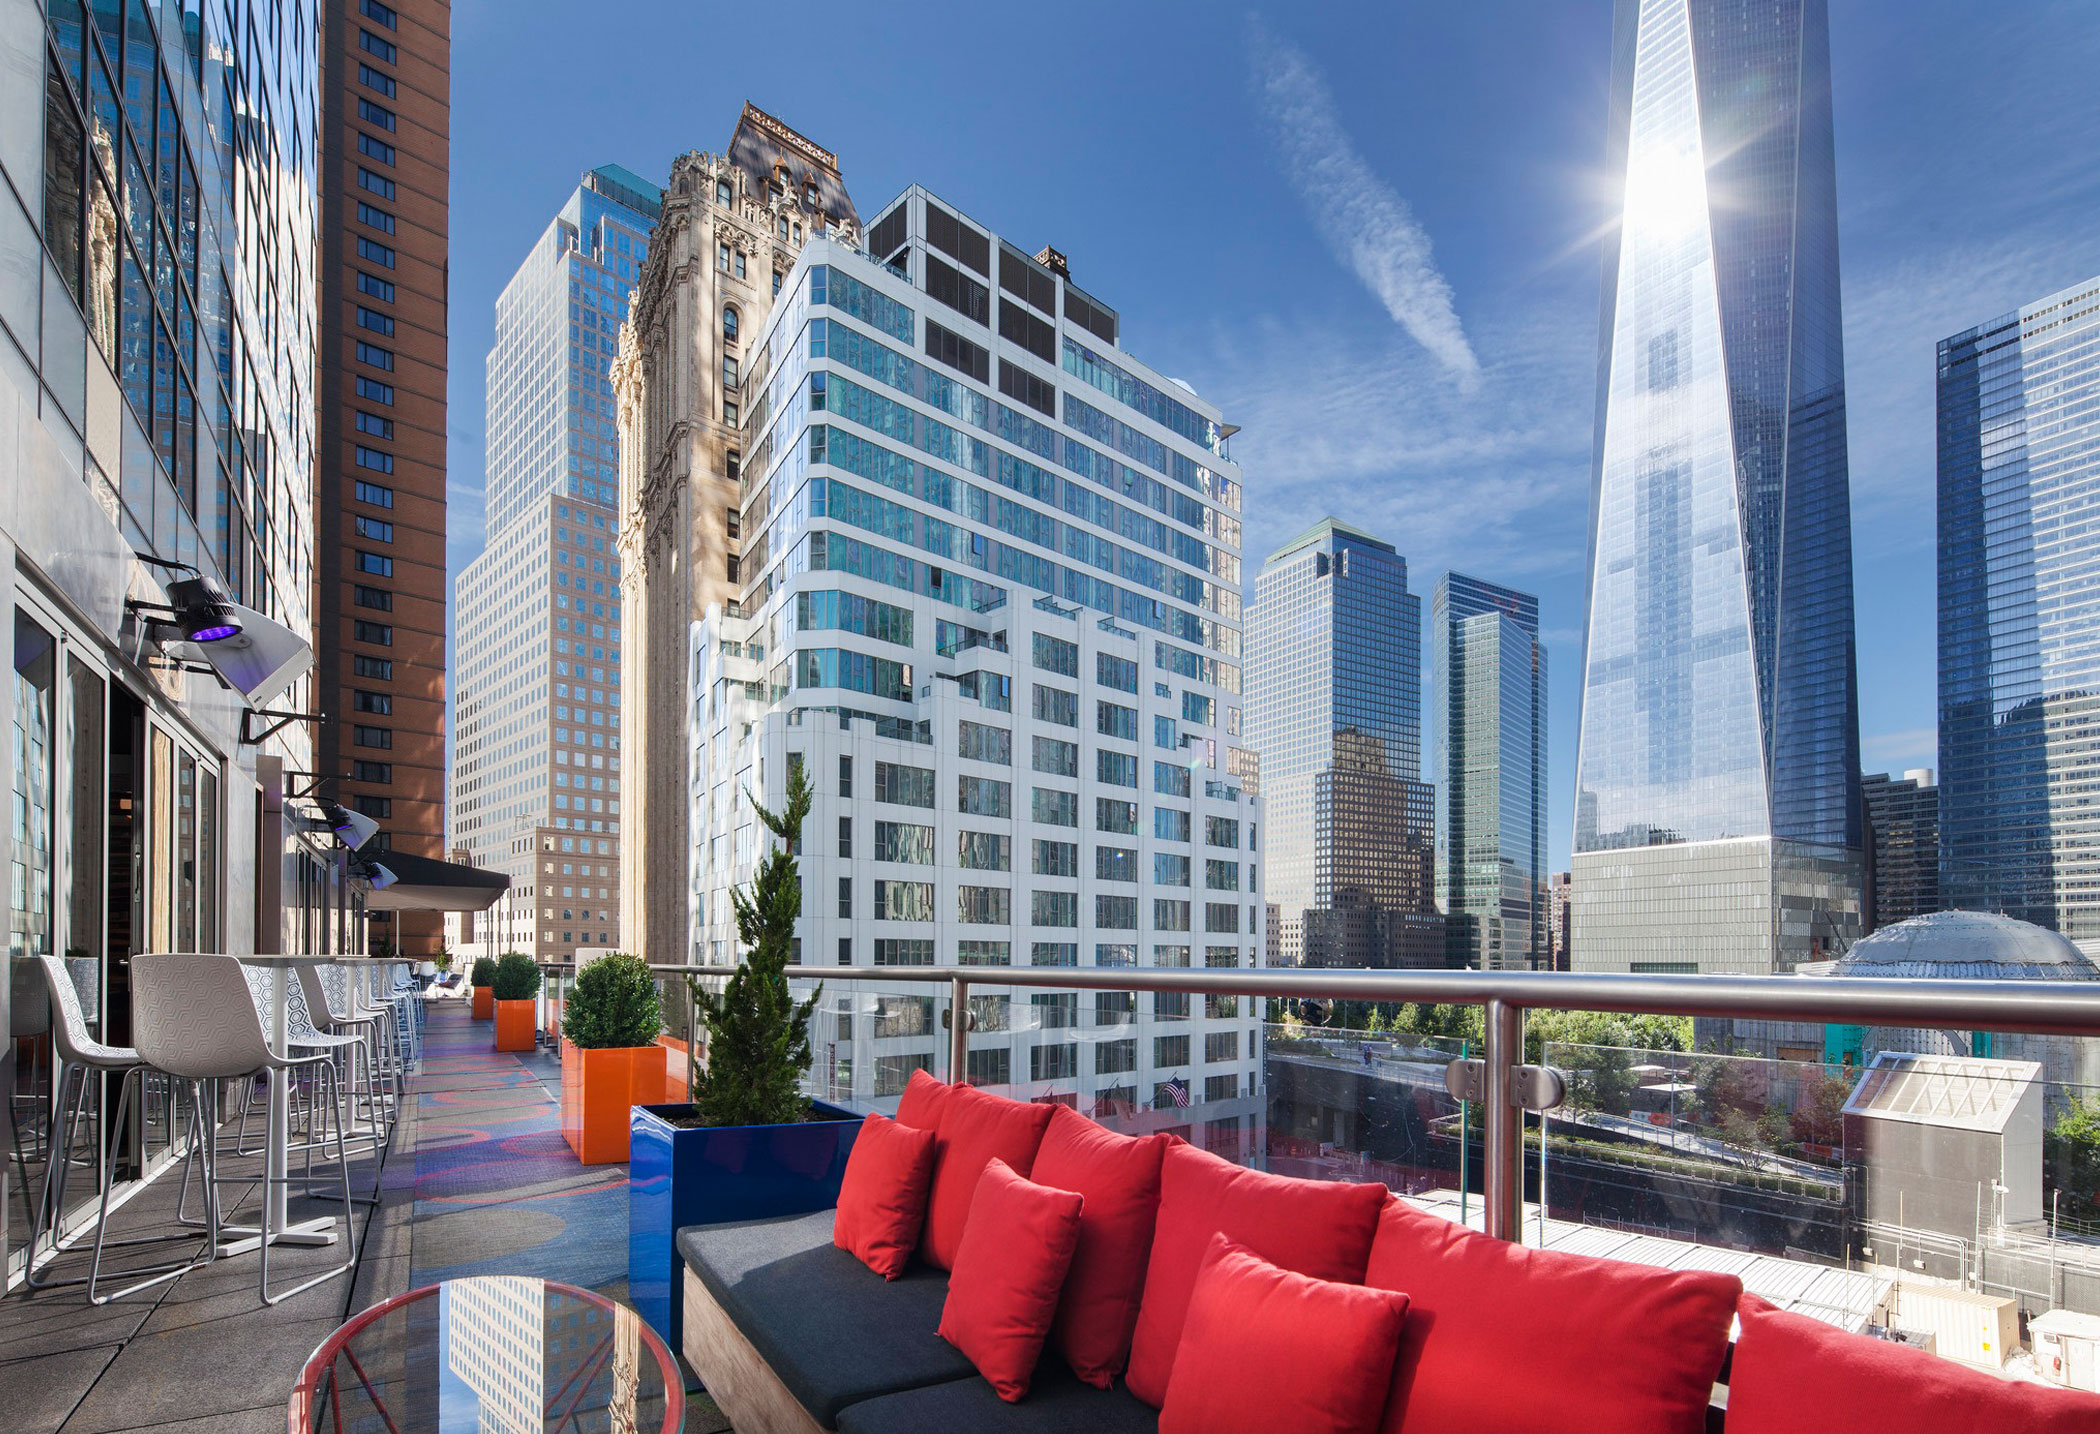 W Hotels of New York - One Stunning Metropolis, Four Inspiring Hotels